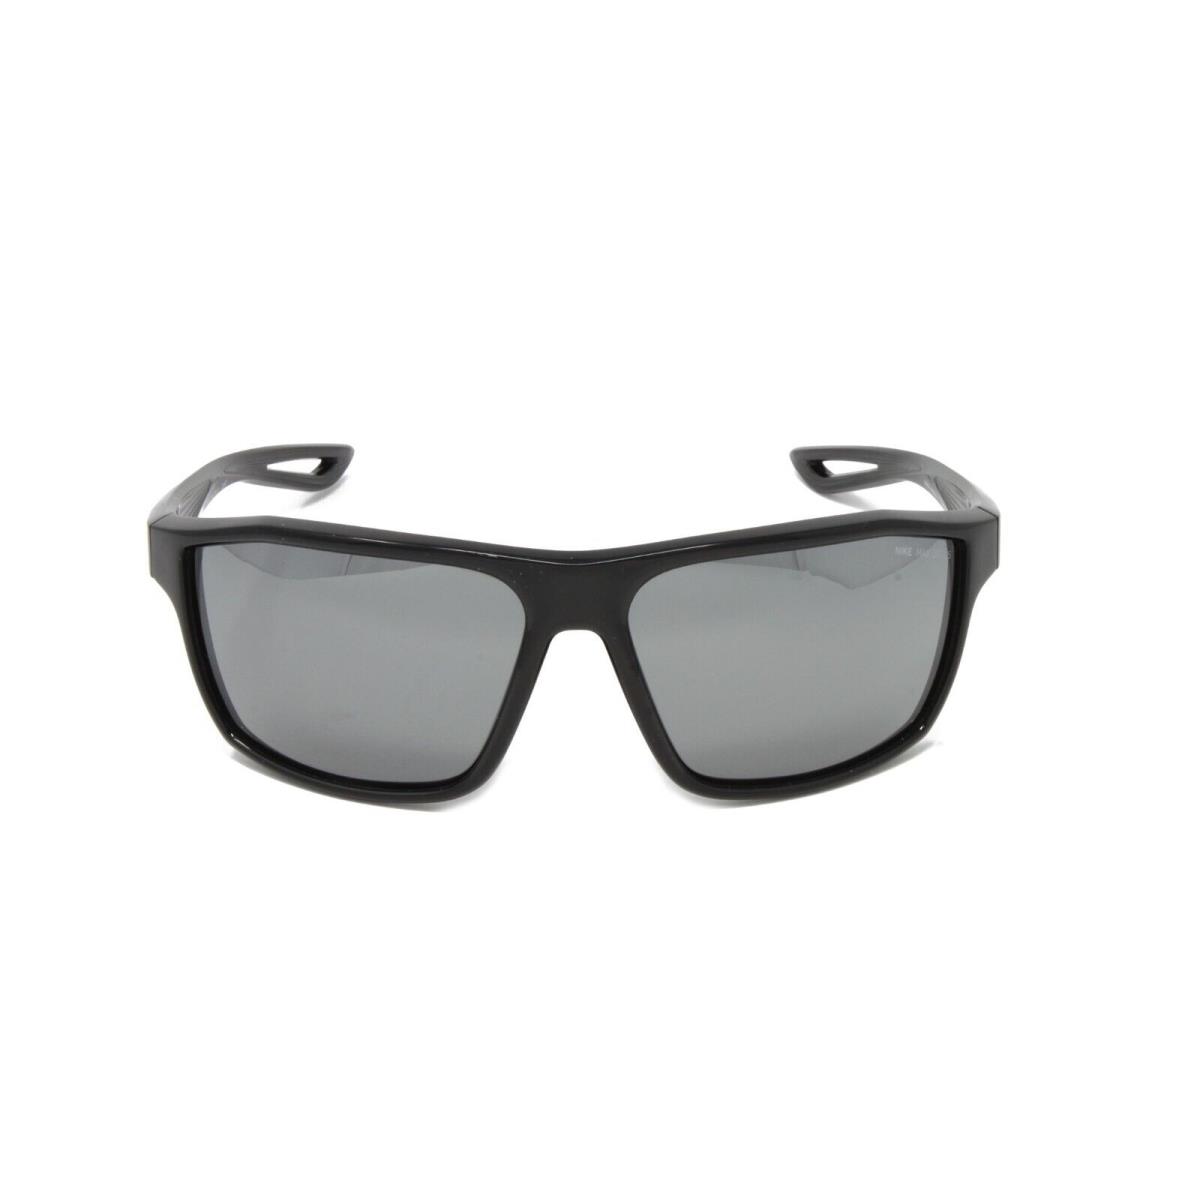 Nike Sunglasses Legend EV0940 001 Black Volt 65mm Grey Silver Mirrored Lens